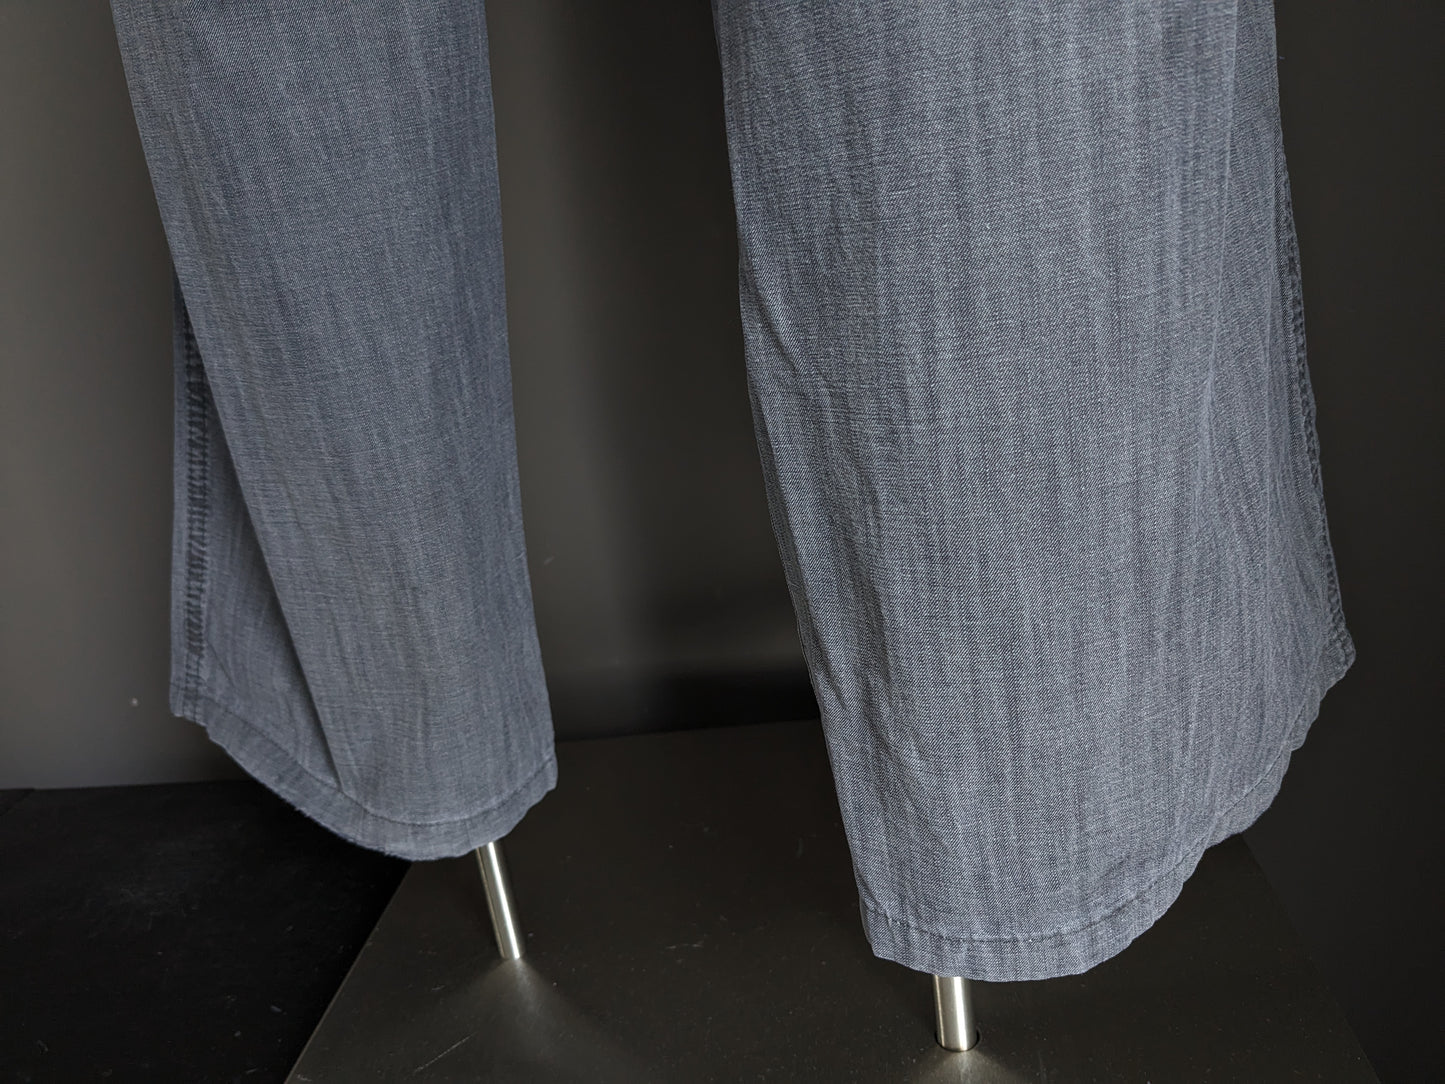 Pantaloni / pantaloni da club o comfort. Moto grigio. Dimensione 29 (58 / 2xl / xxl)